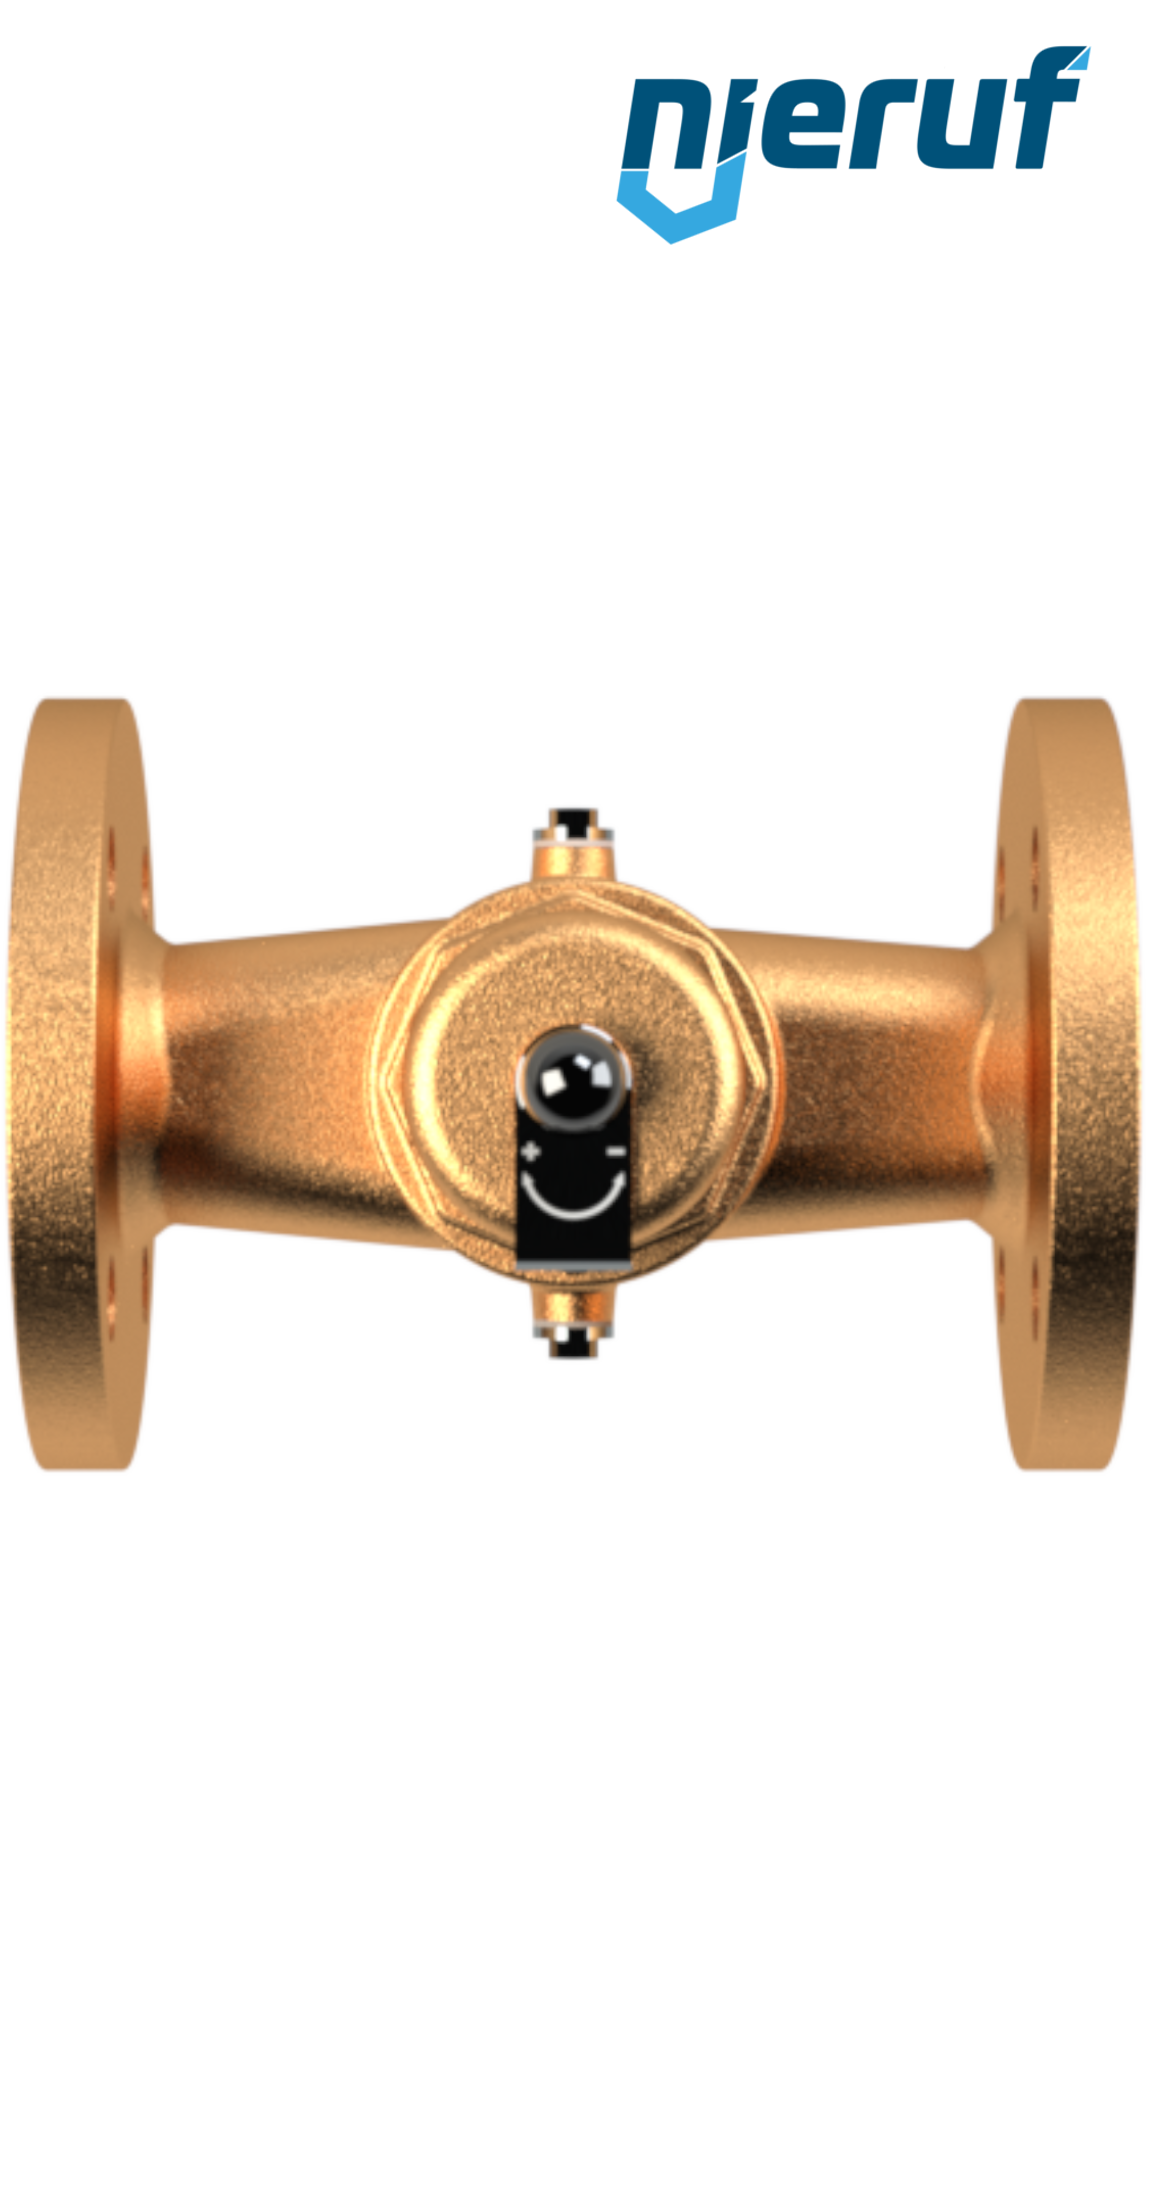 pressure reducing valve DN 50 PN40 DM06 gunmetal/brass FKM 5.0 - 15.0 bar